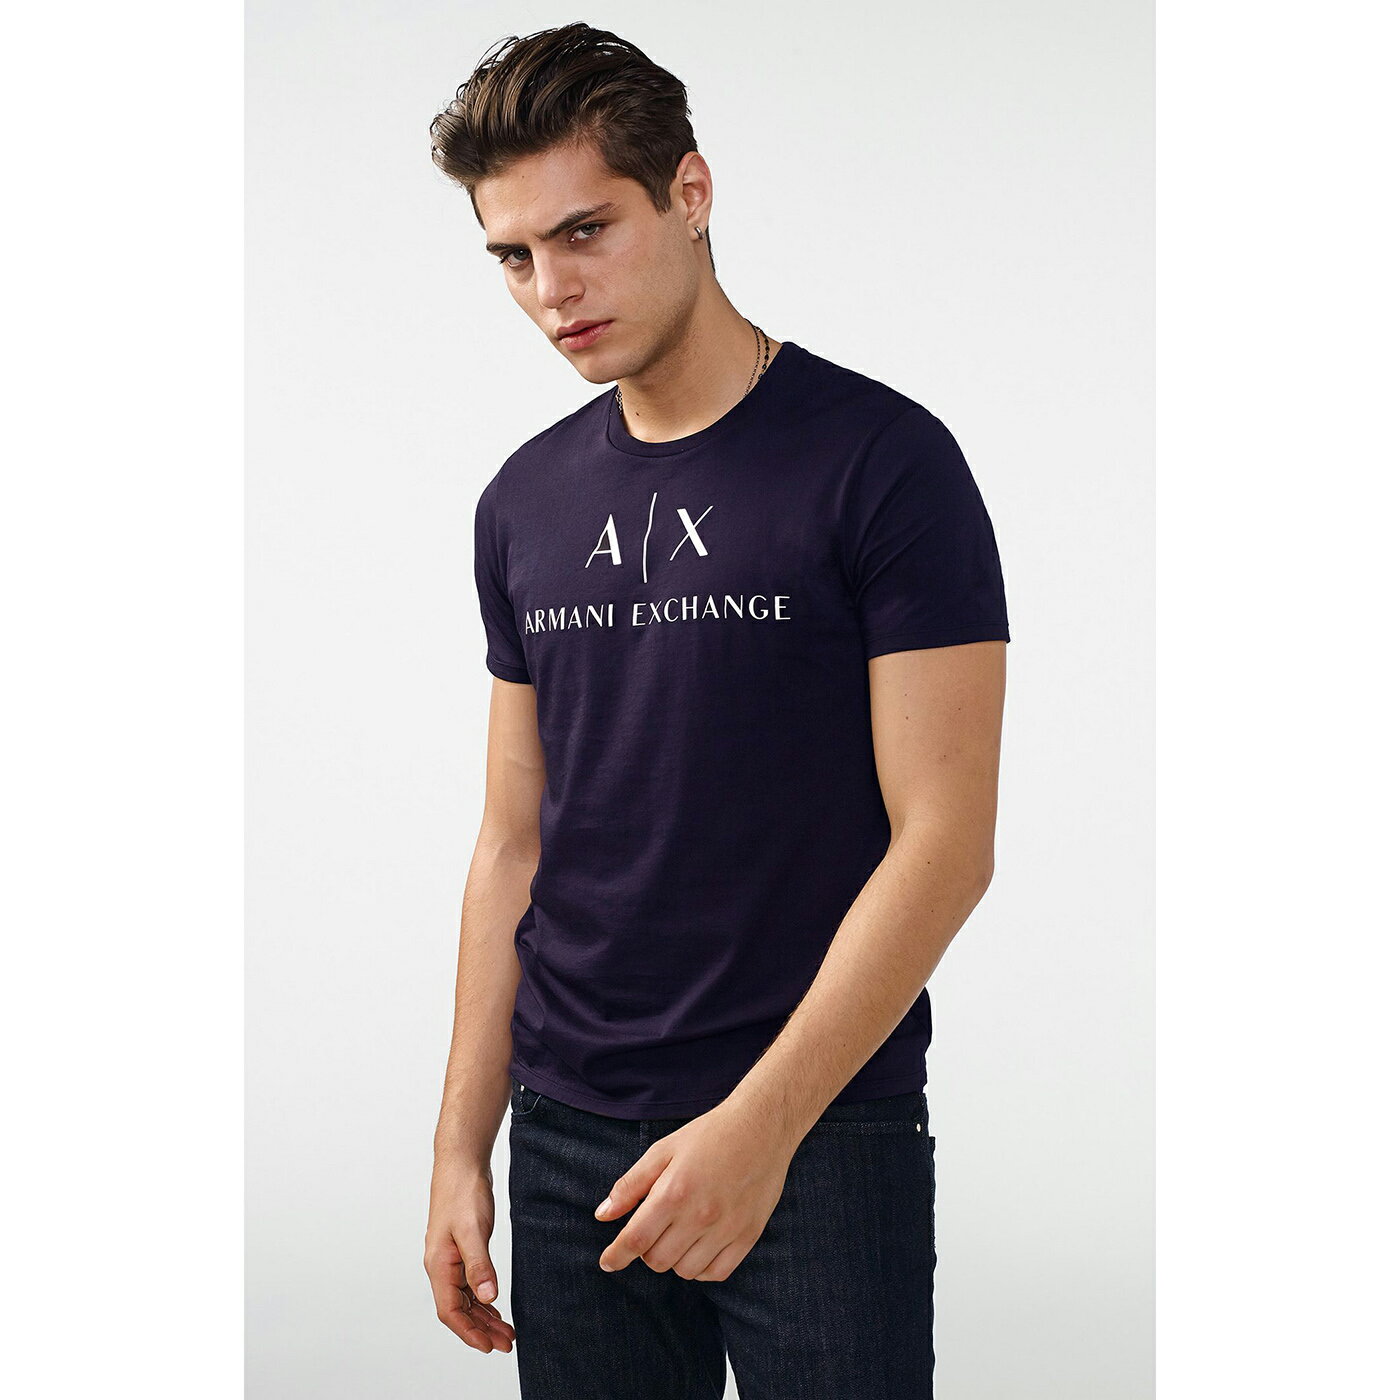 美國百分百【Armani Exchange】T恤 AX 短袖 logo 上衣 T-shirt 深藍 XS~S號 G050 2